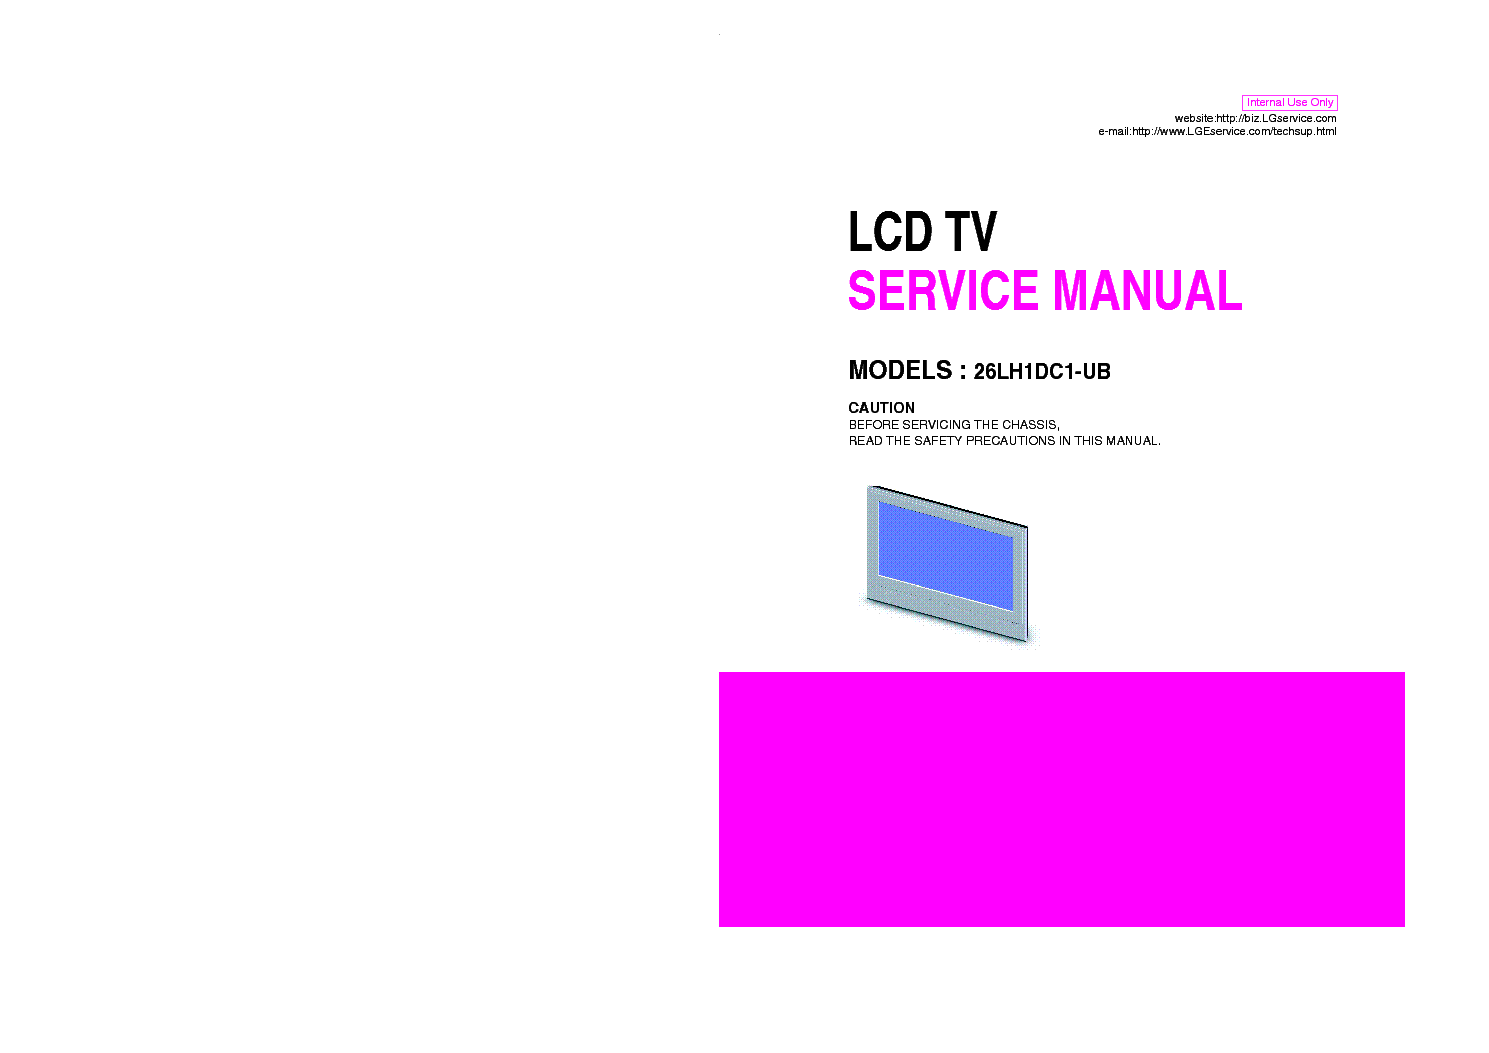 LG 26LH1DC1 service manual (1st page)